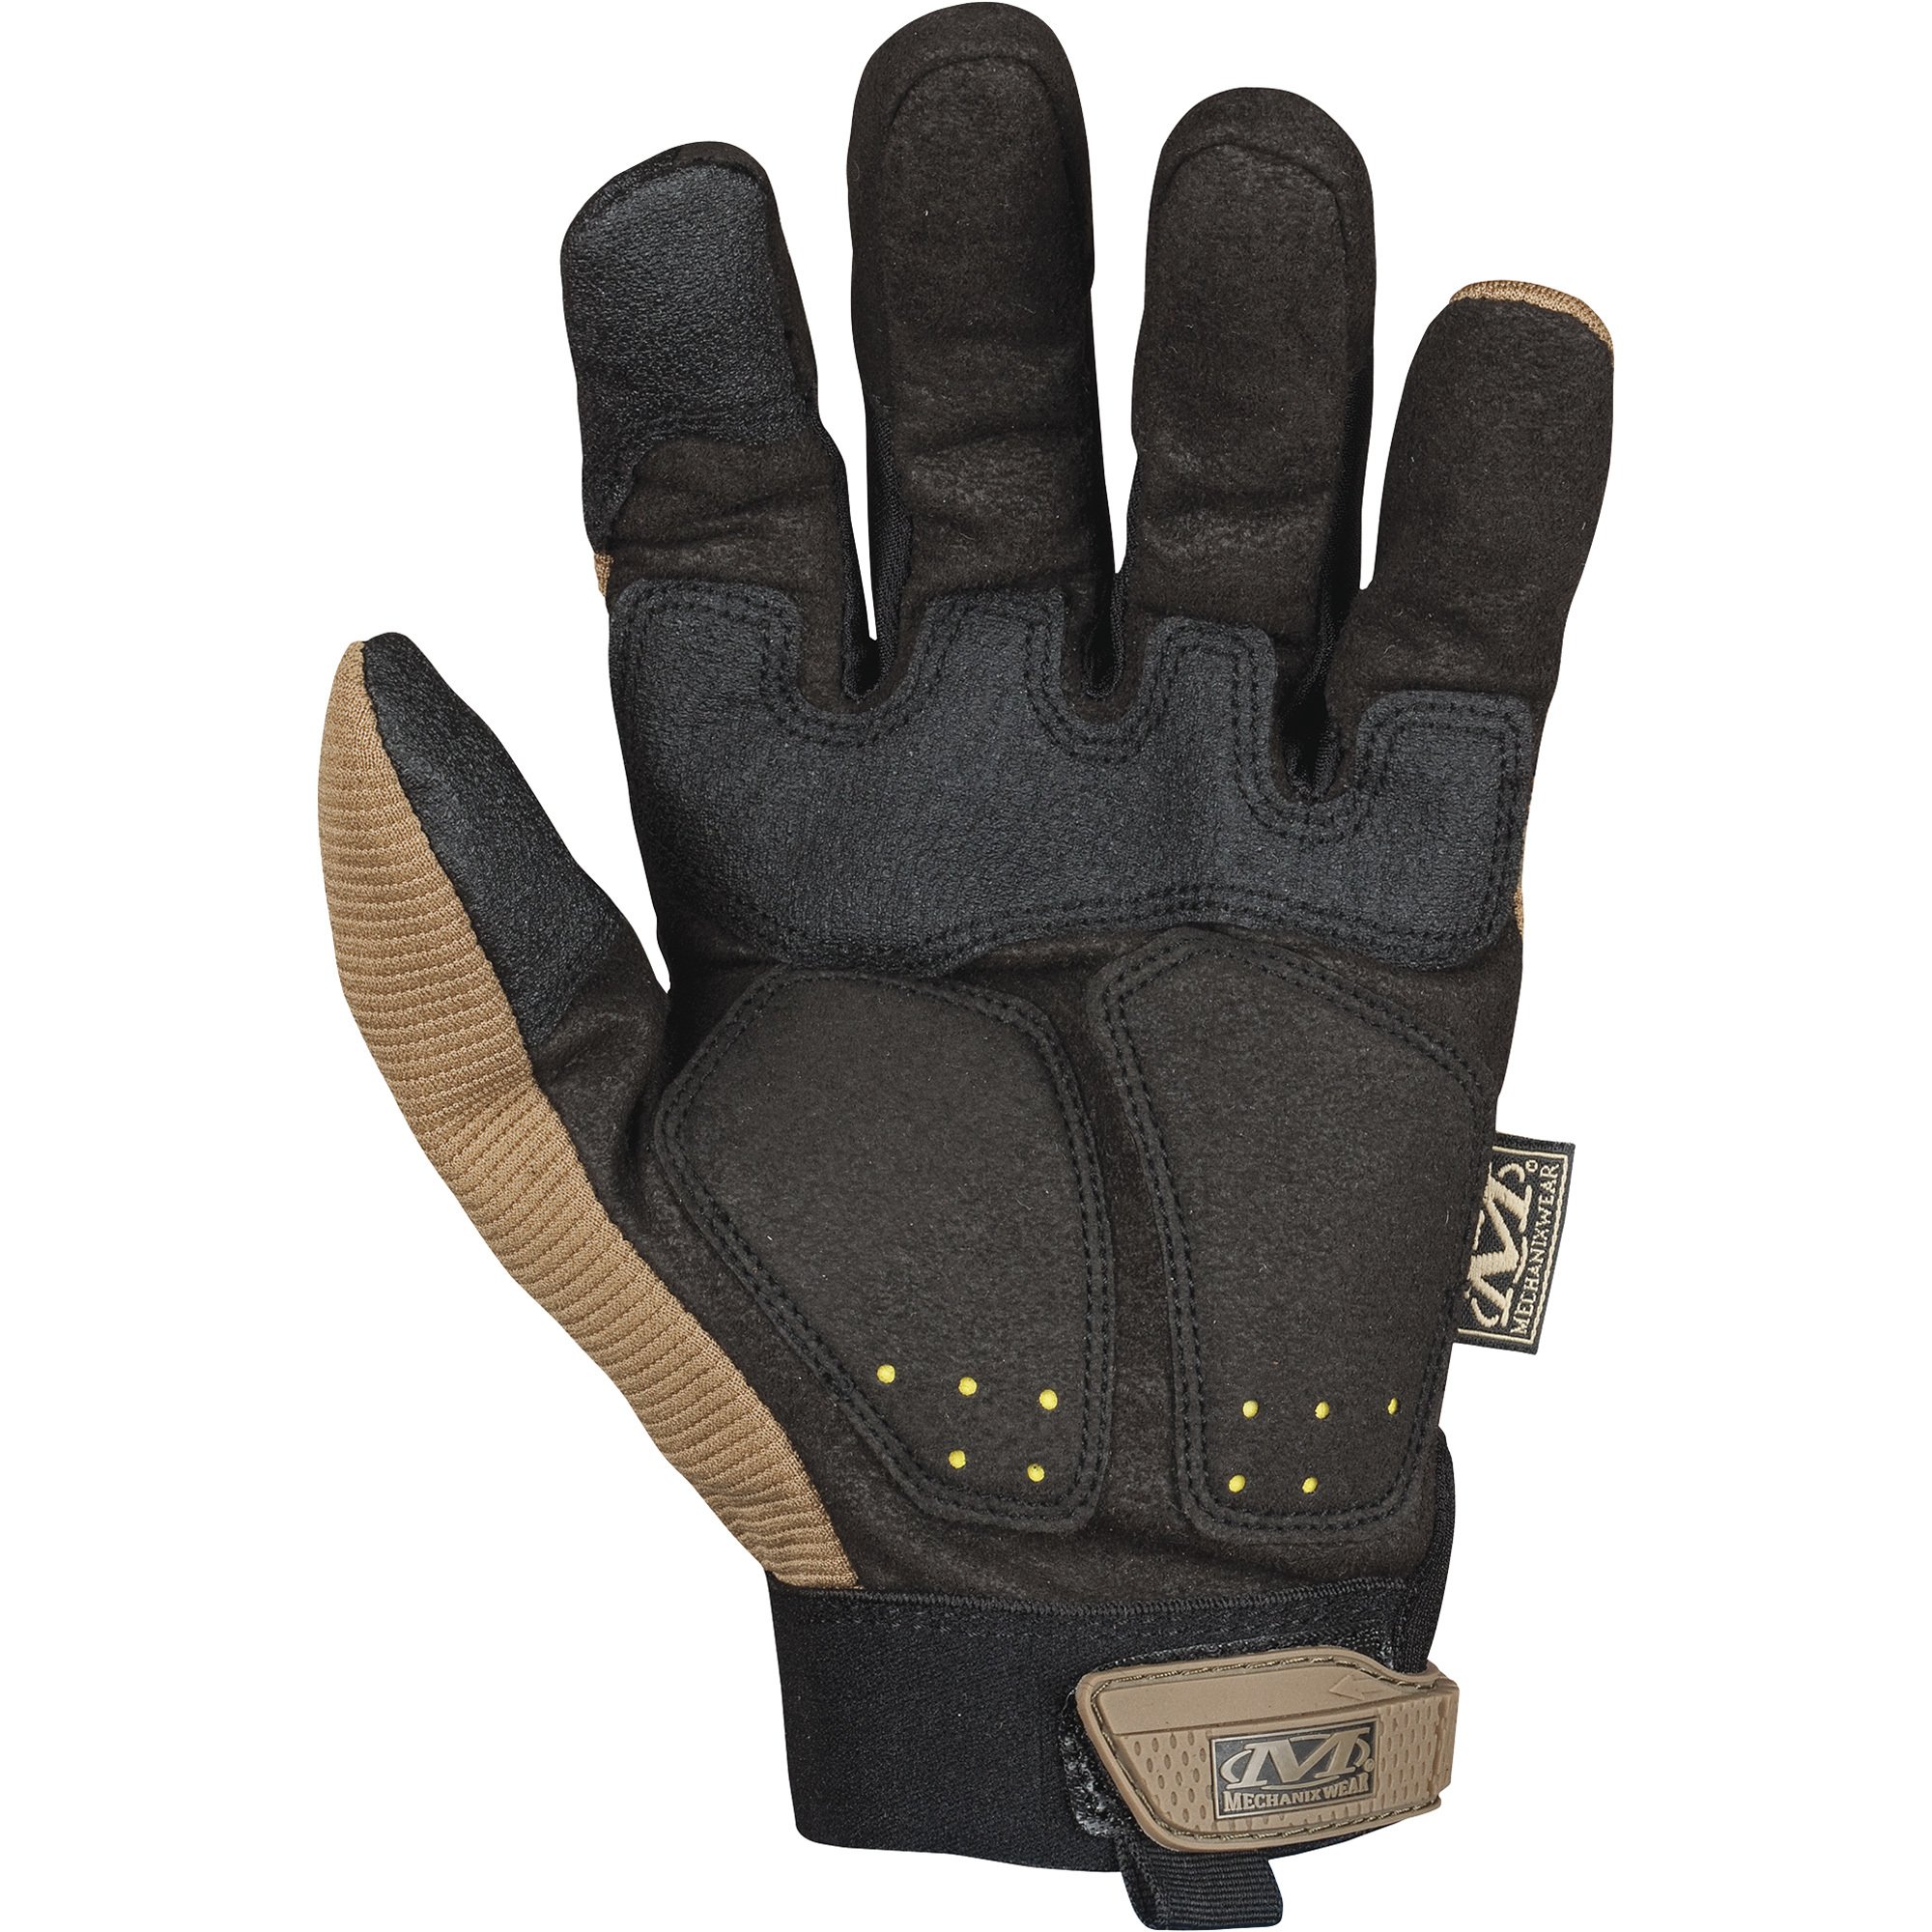 Mechanix Men's Wear M-Pact Glove - Coyote Small, Model# MPT-72-008